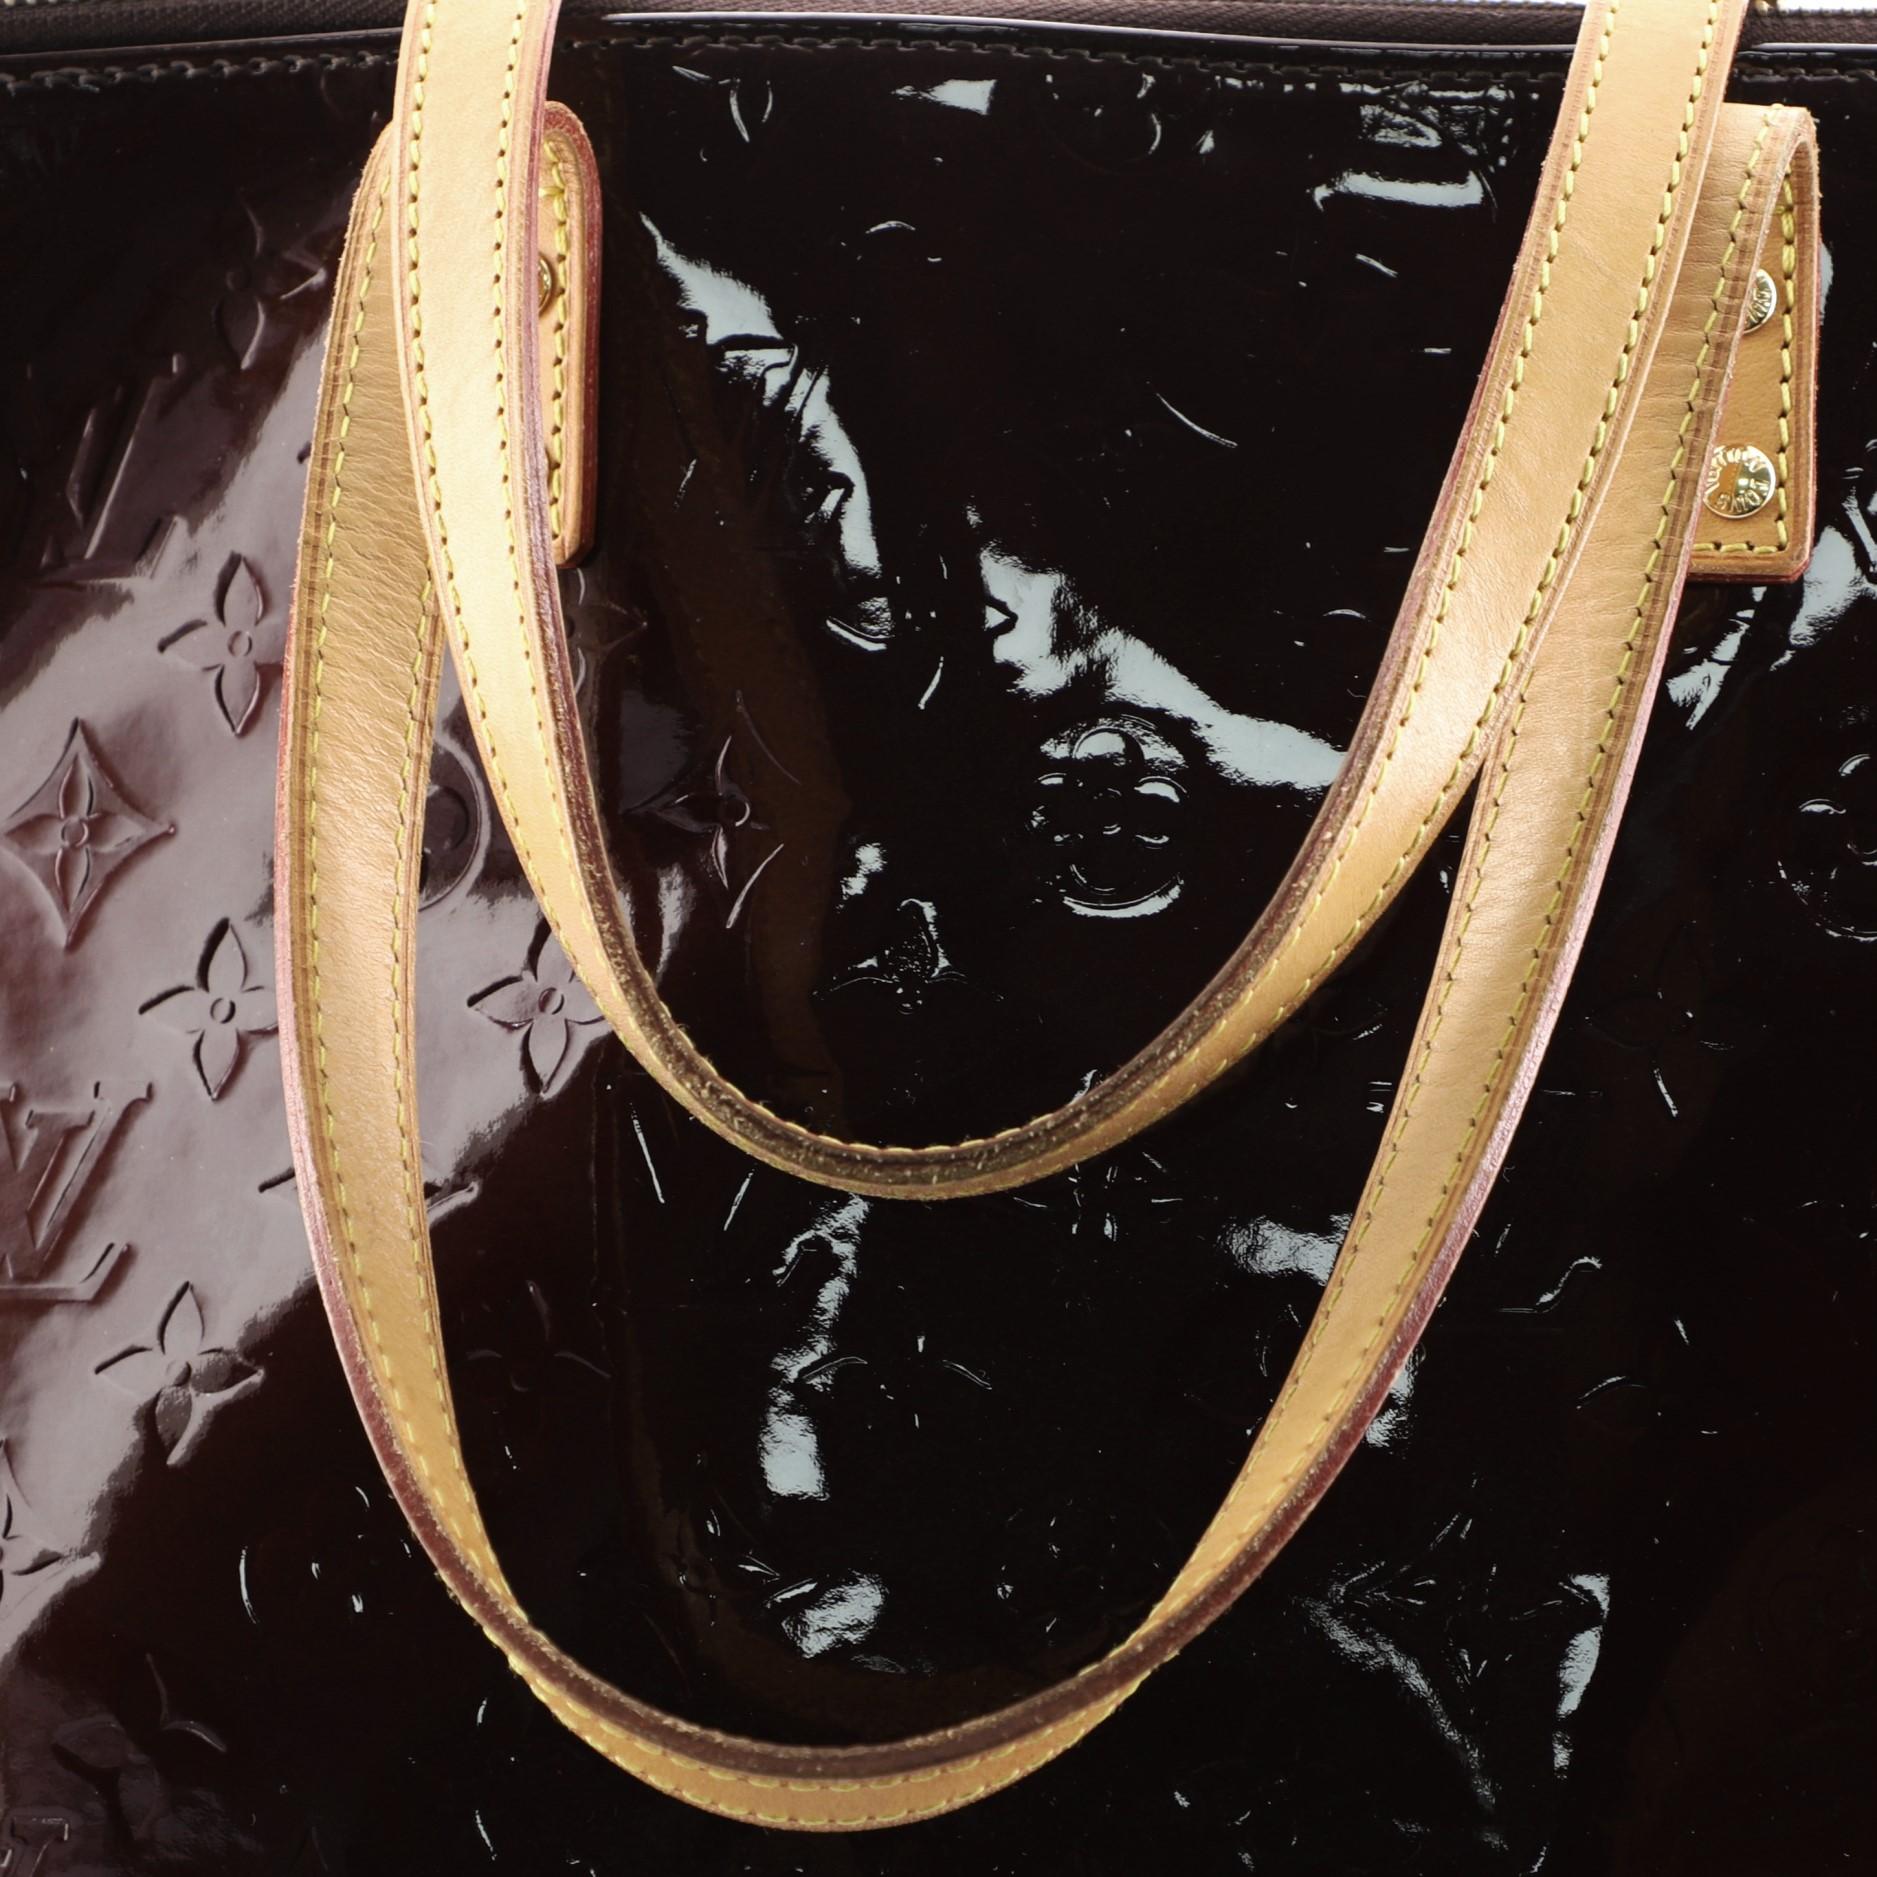 Women's Louis Vuitton Bellevue Handbag Monogram Vernis GM